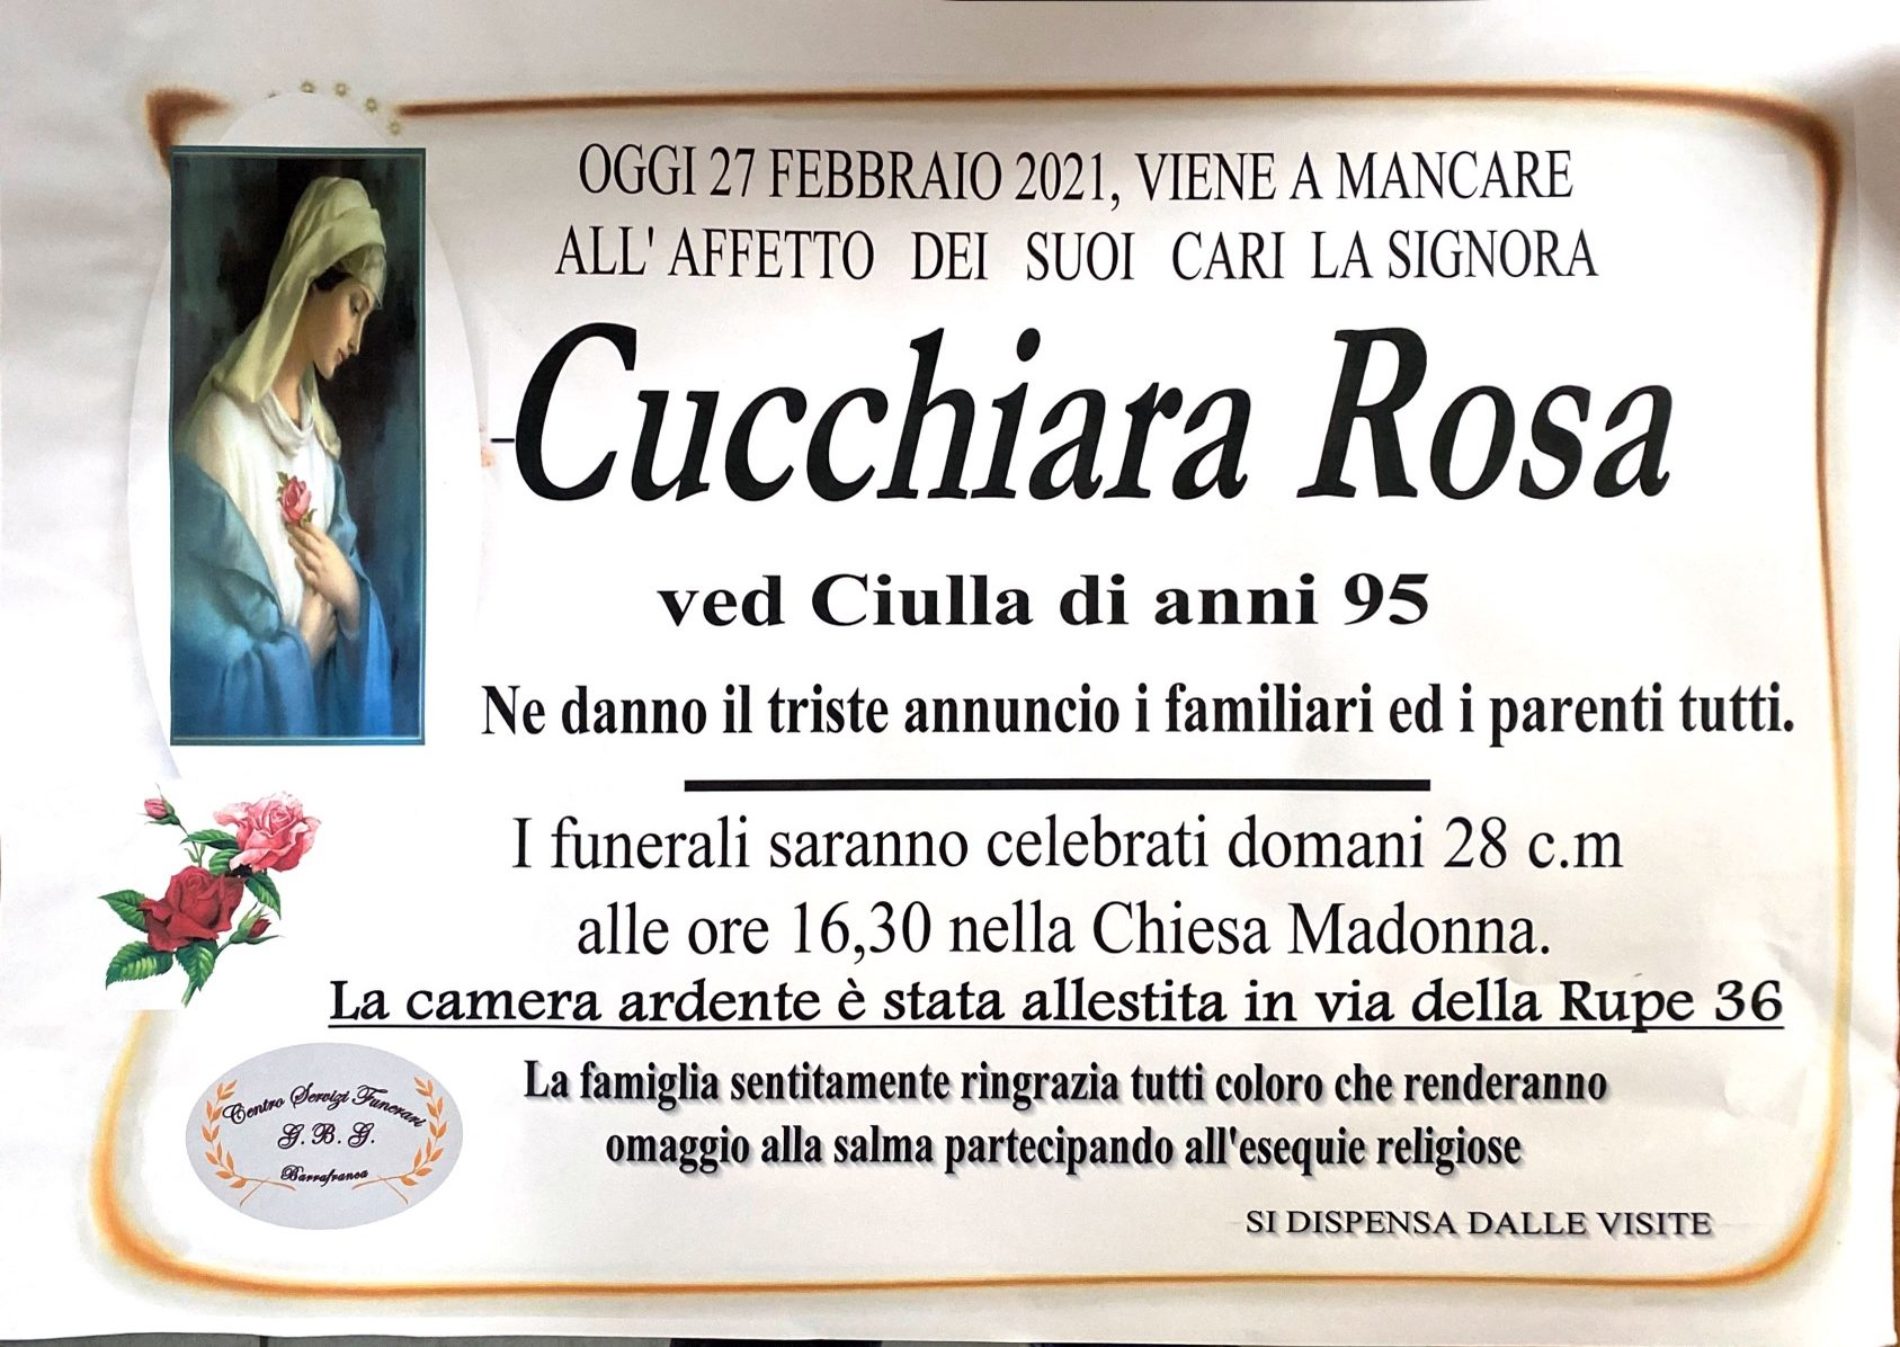 Annuncio servizi funerari agenzia G.B.G. sig.ra Cucchiara Rosa ved. Ciulla di anni 95